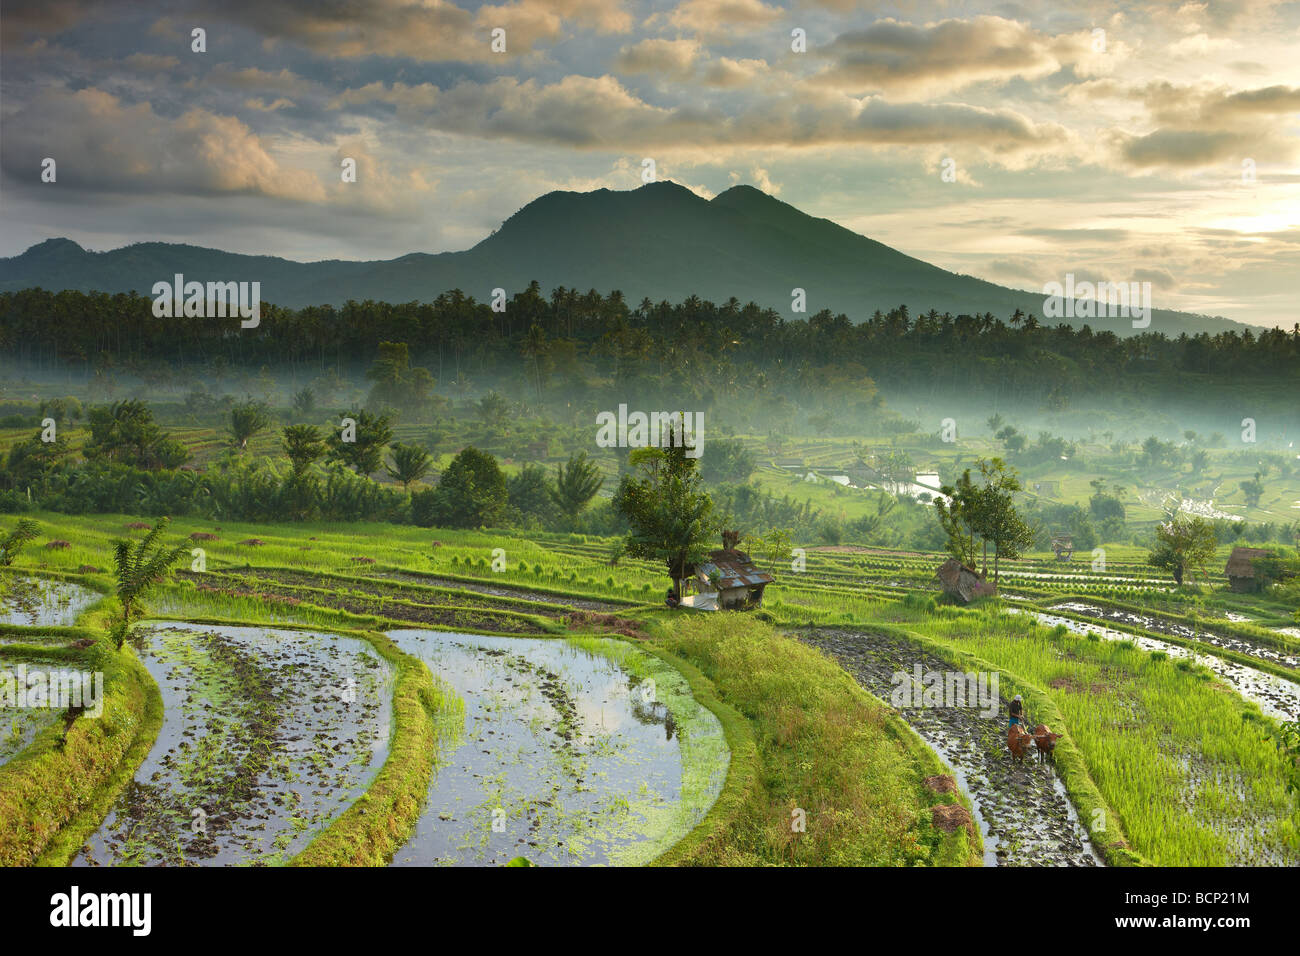 Ochsen angetrieben Pflug in den terrassenförmig angelegten Reis Felder nr Tirtagangga im Morgengrauen mit der vulkanischen Gipfel des Gunung Lempuyang, Bali, Indonesien Stockfoto